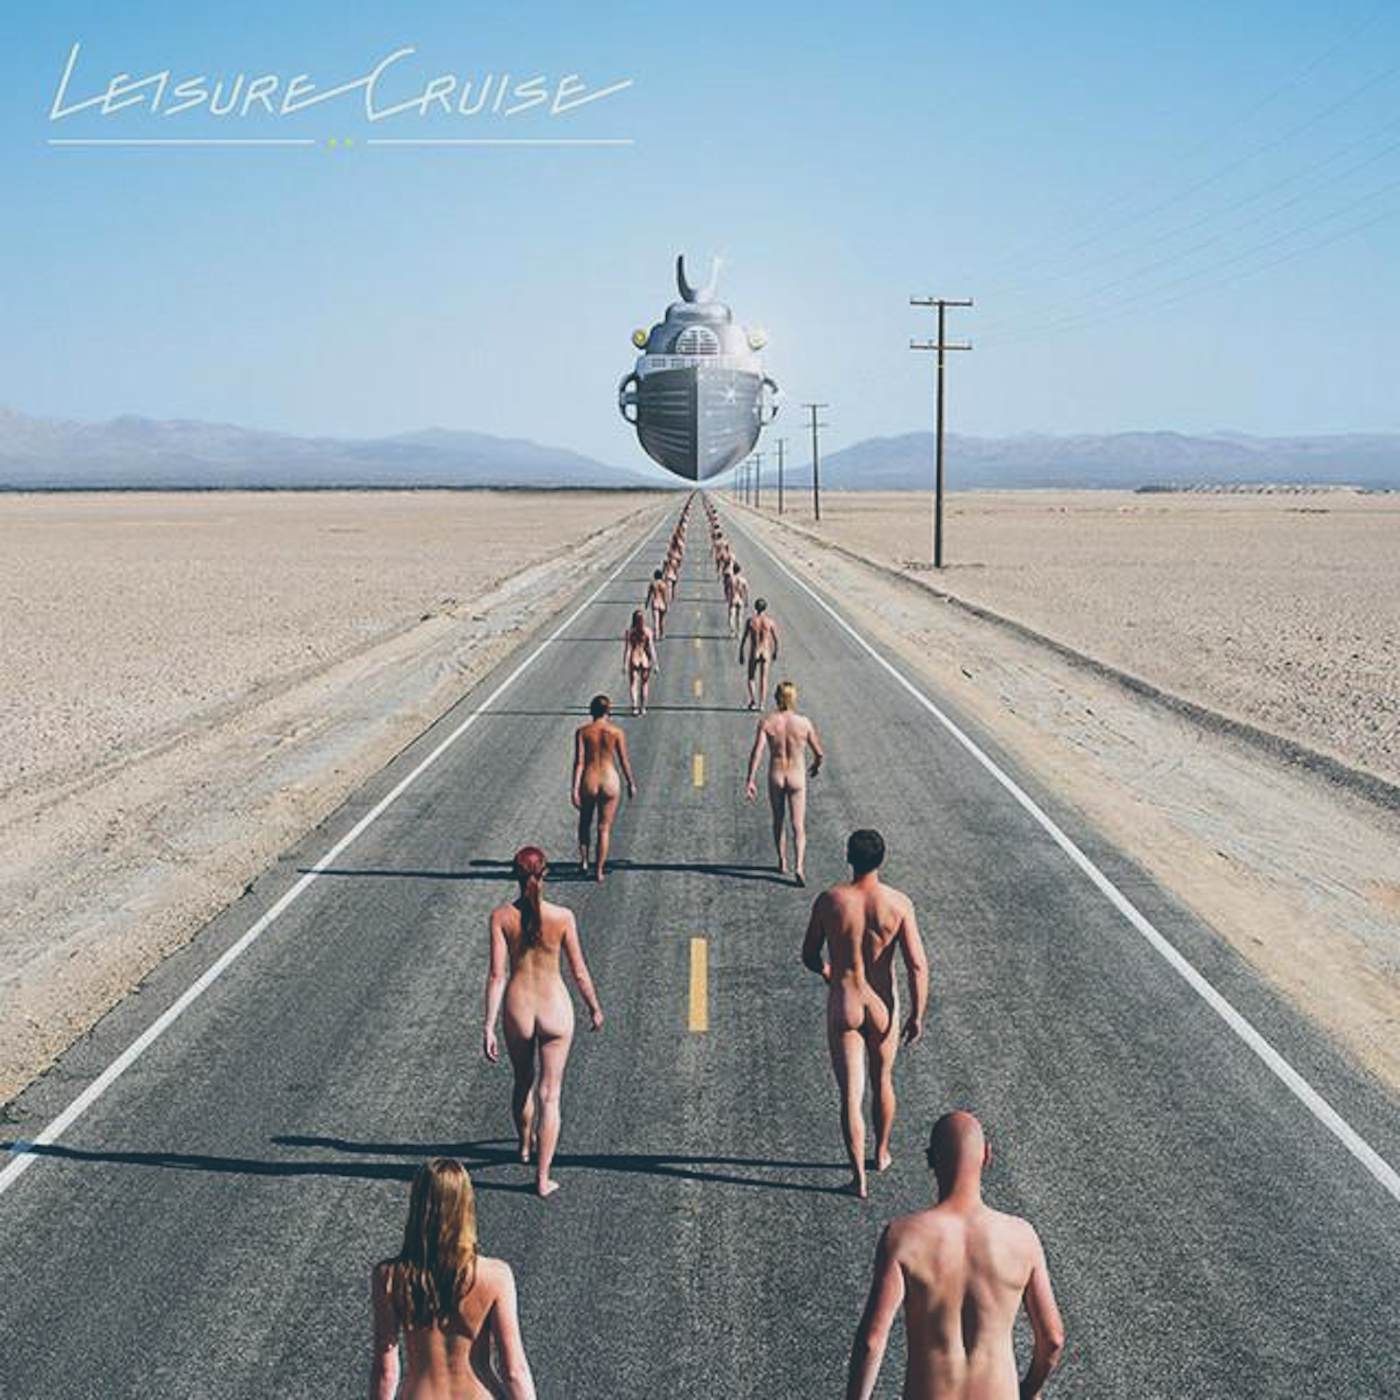 Leisure Cruise